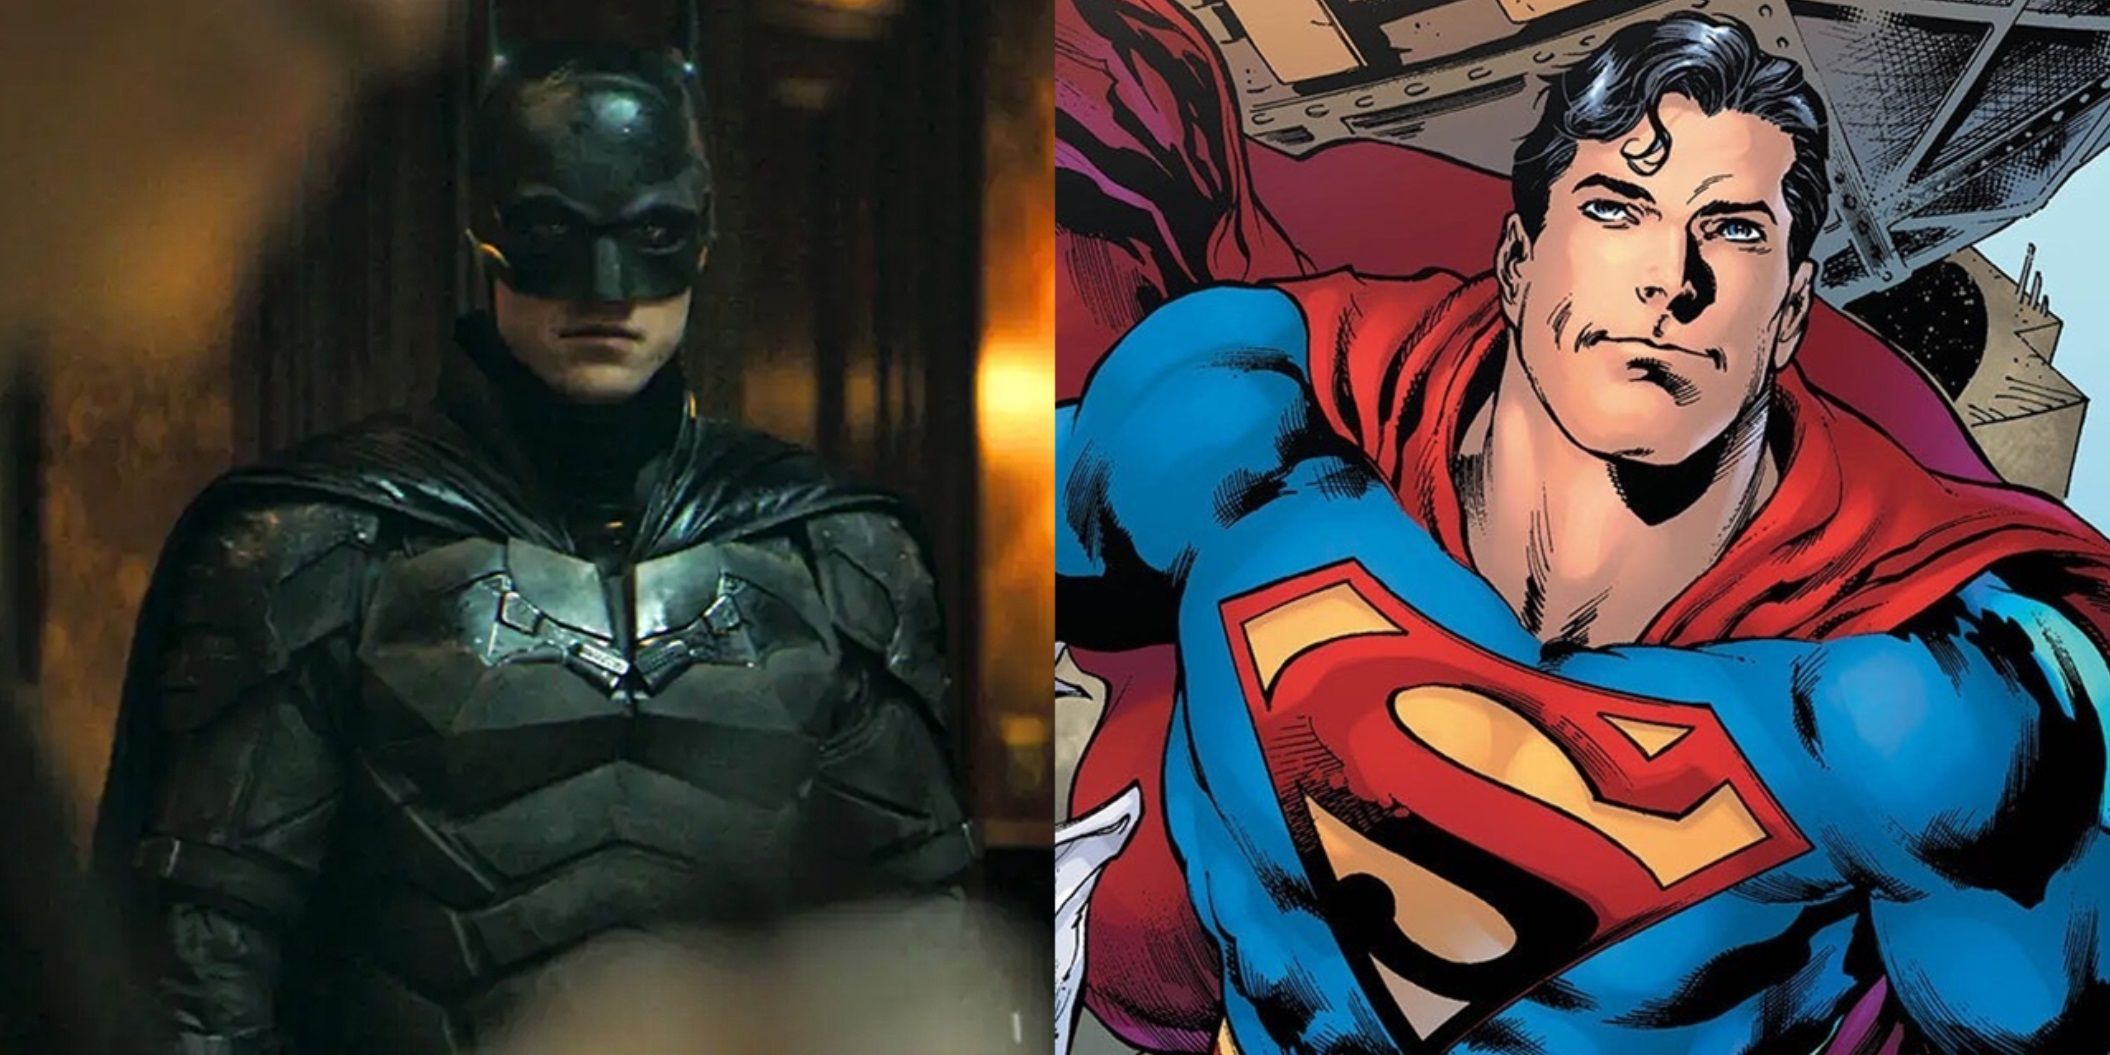 Split image of Robert Pattinson in The Batman and Superman in the DC comics